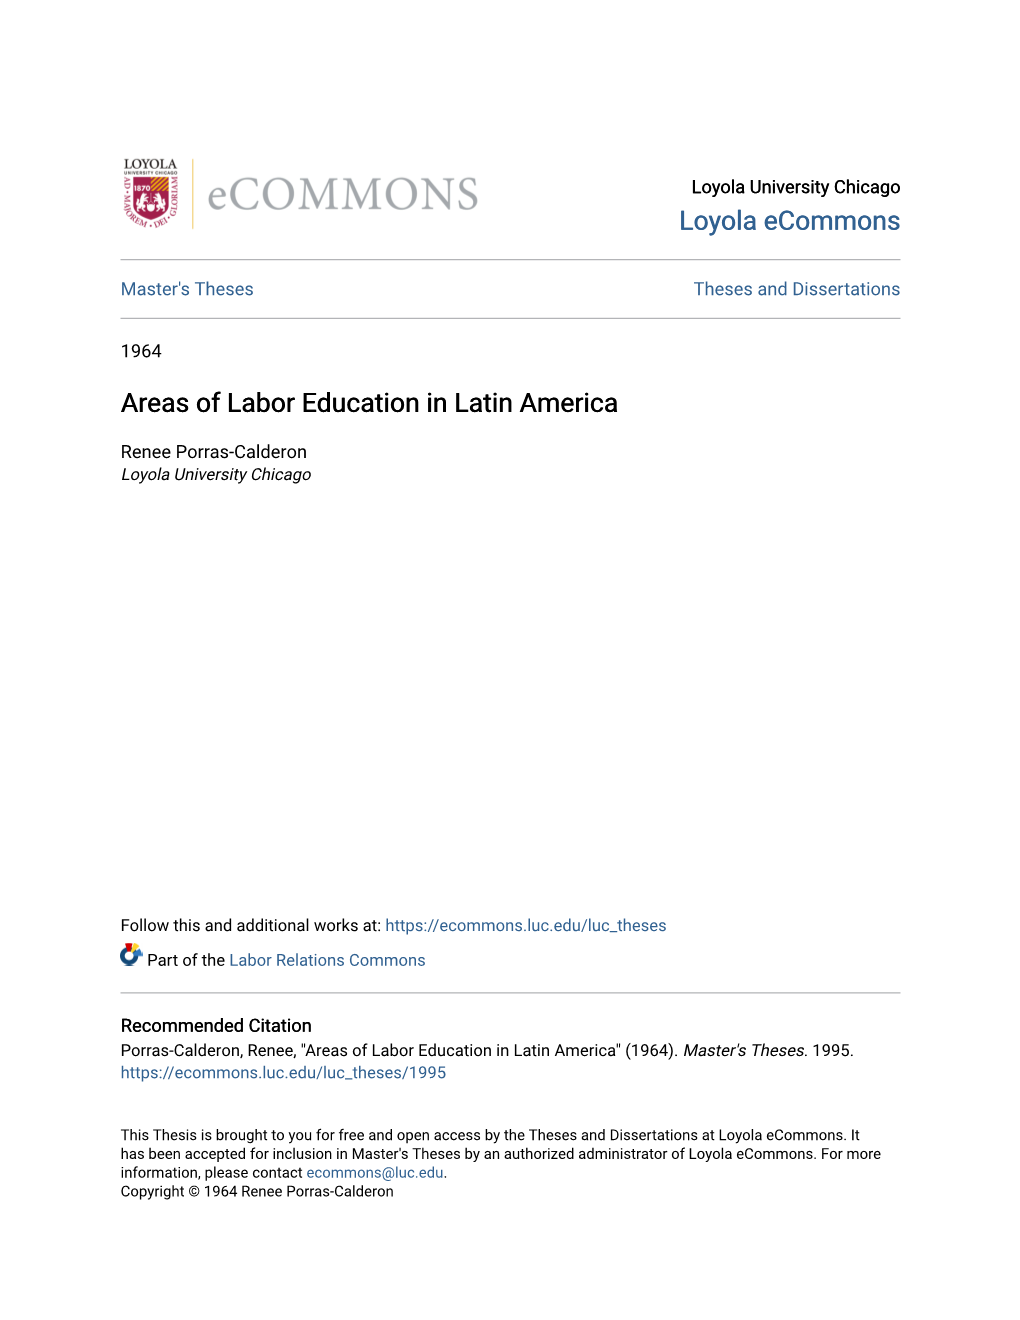 Areas of Labor Education in Latin America